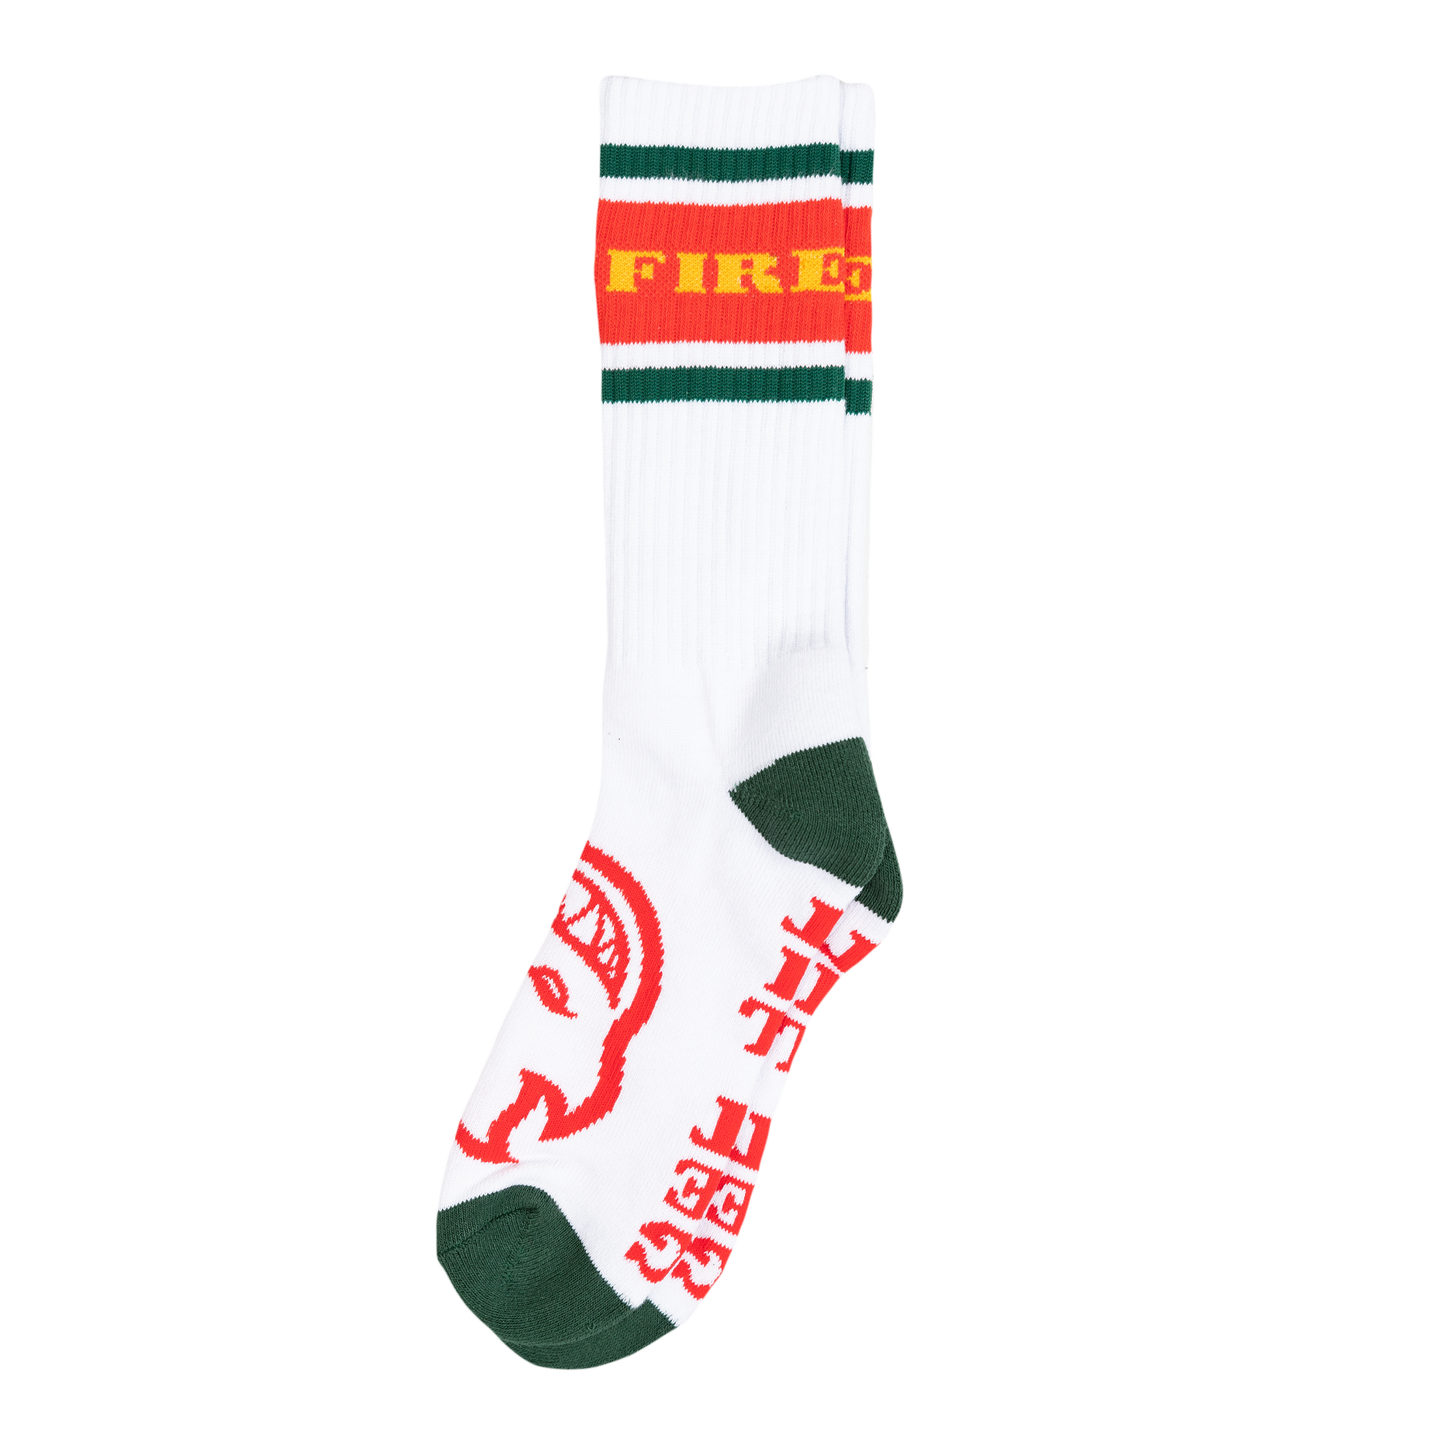 Spitfire Classic 87 Bighead Crew Socks - White/Red/Green/Gold